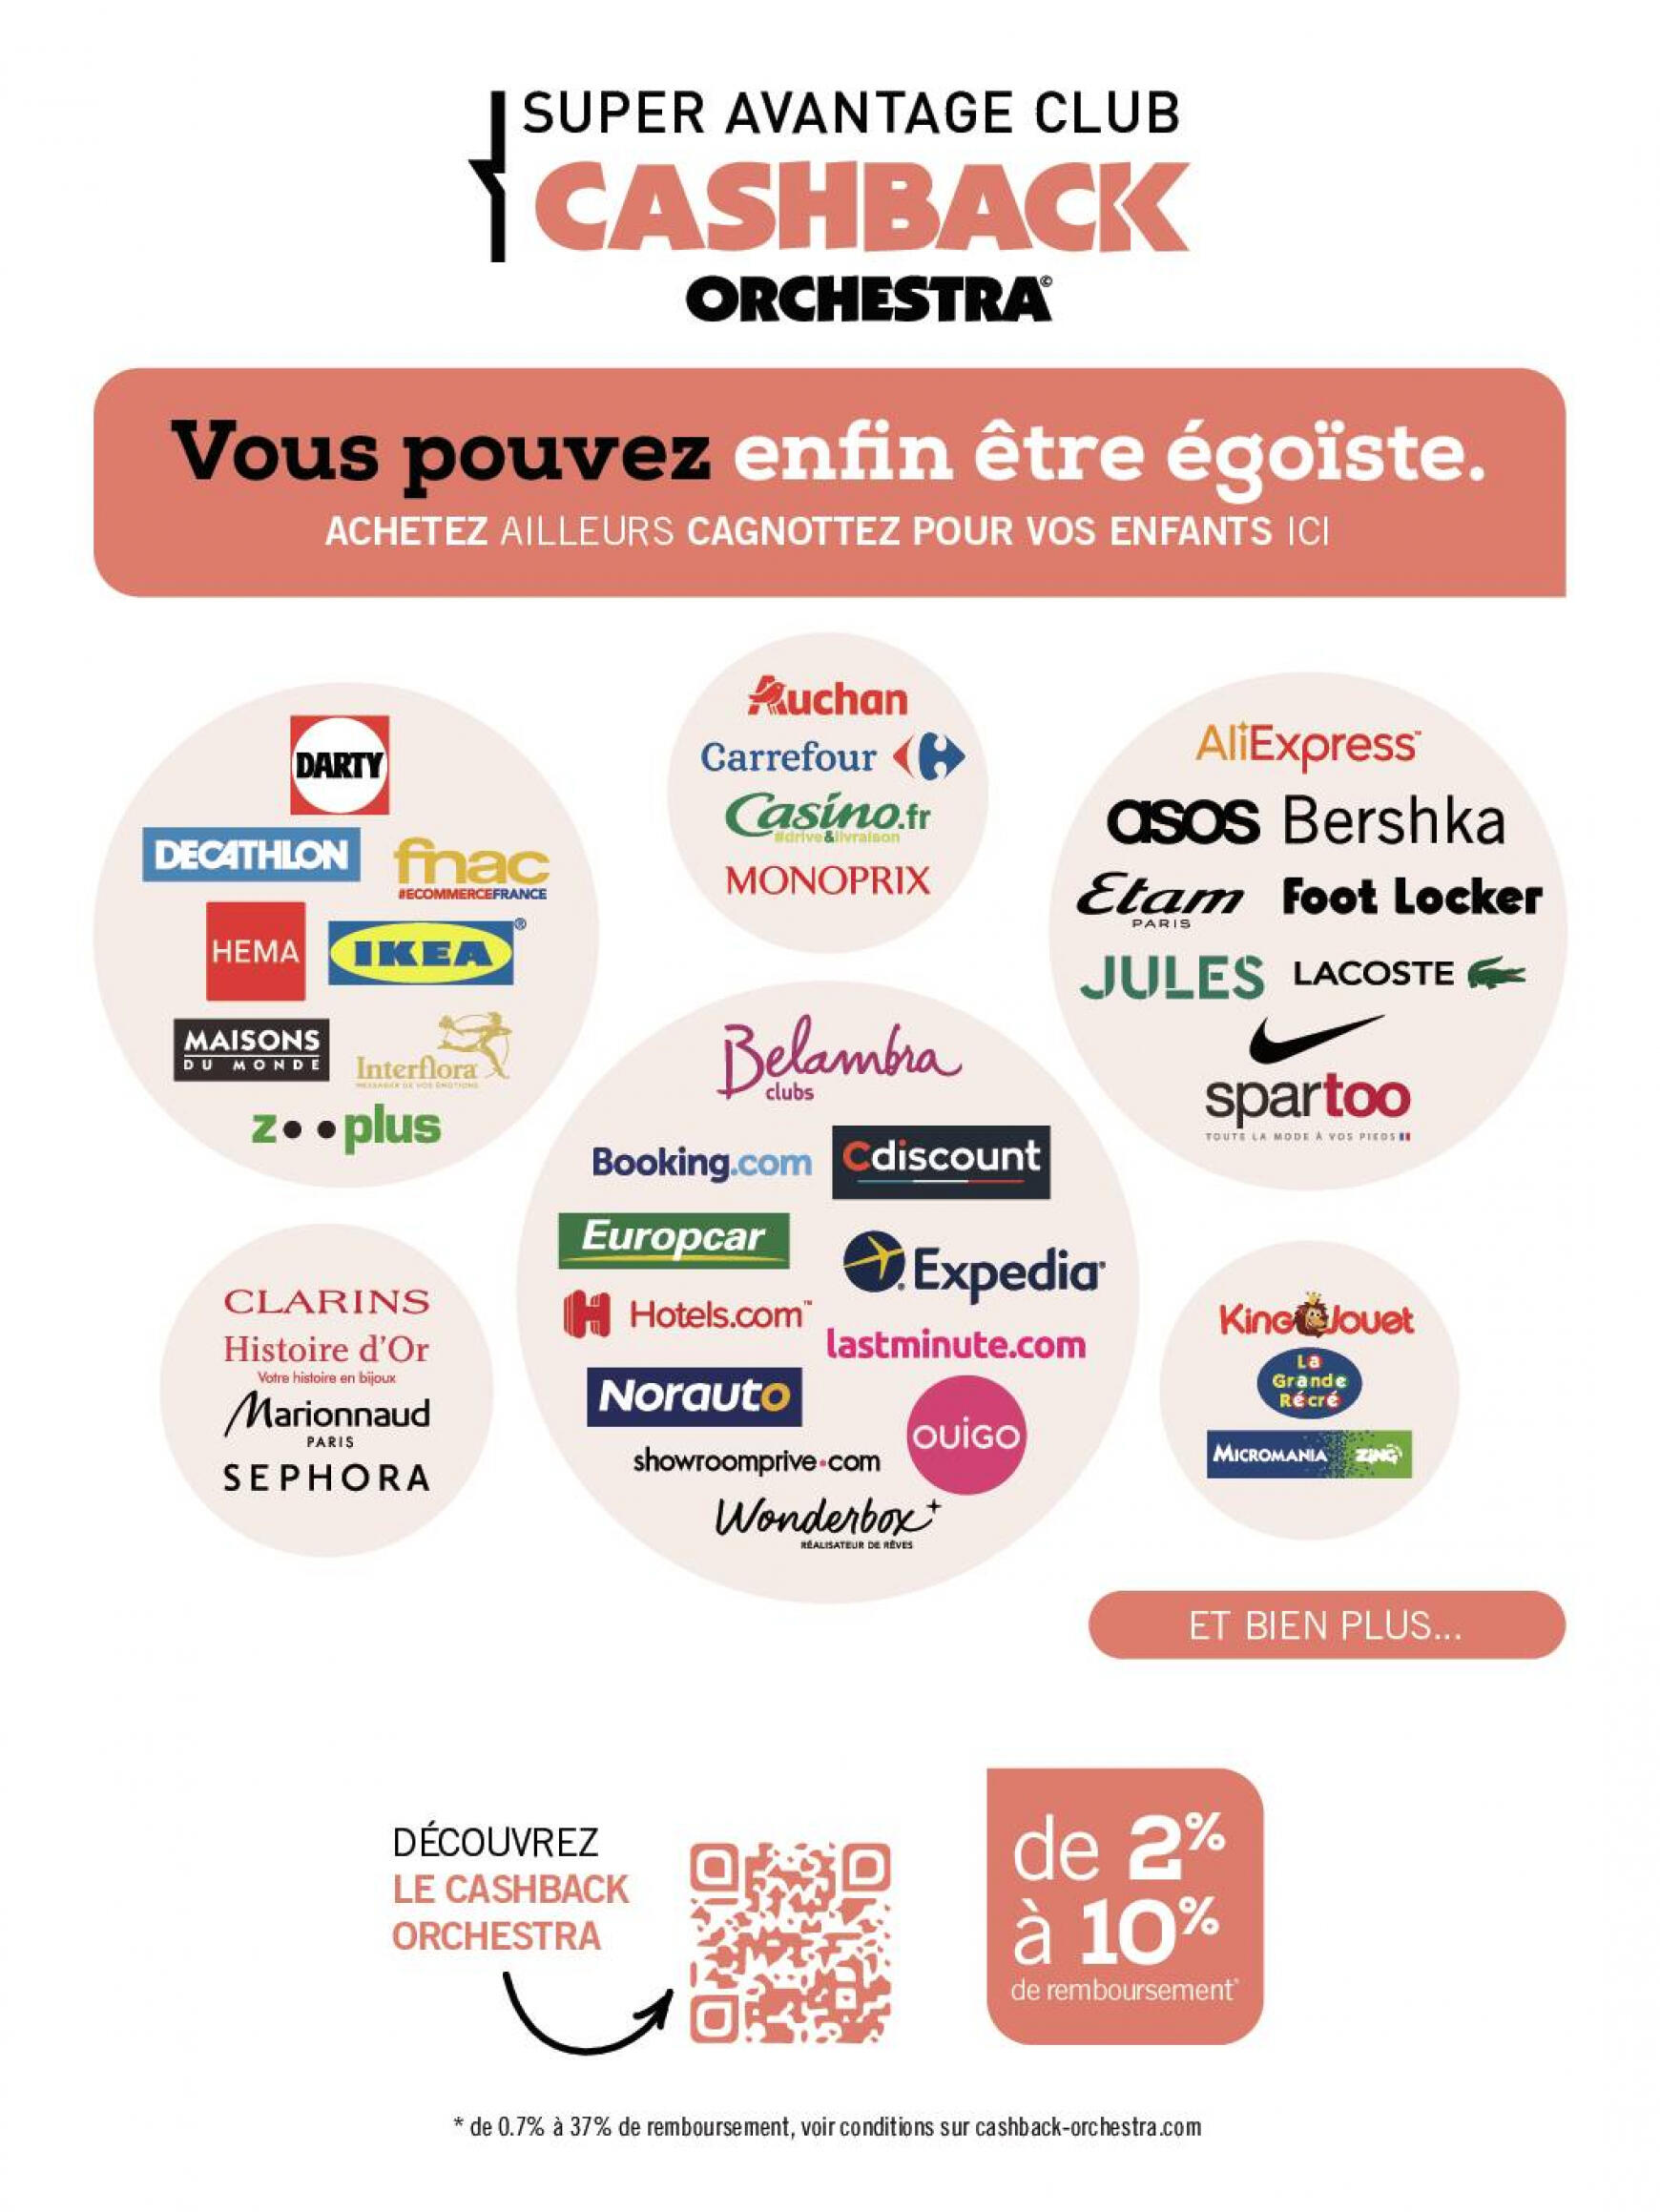 orchestra - Catalogue Orchestra de du samedi 01.04. - page: 6